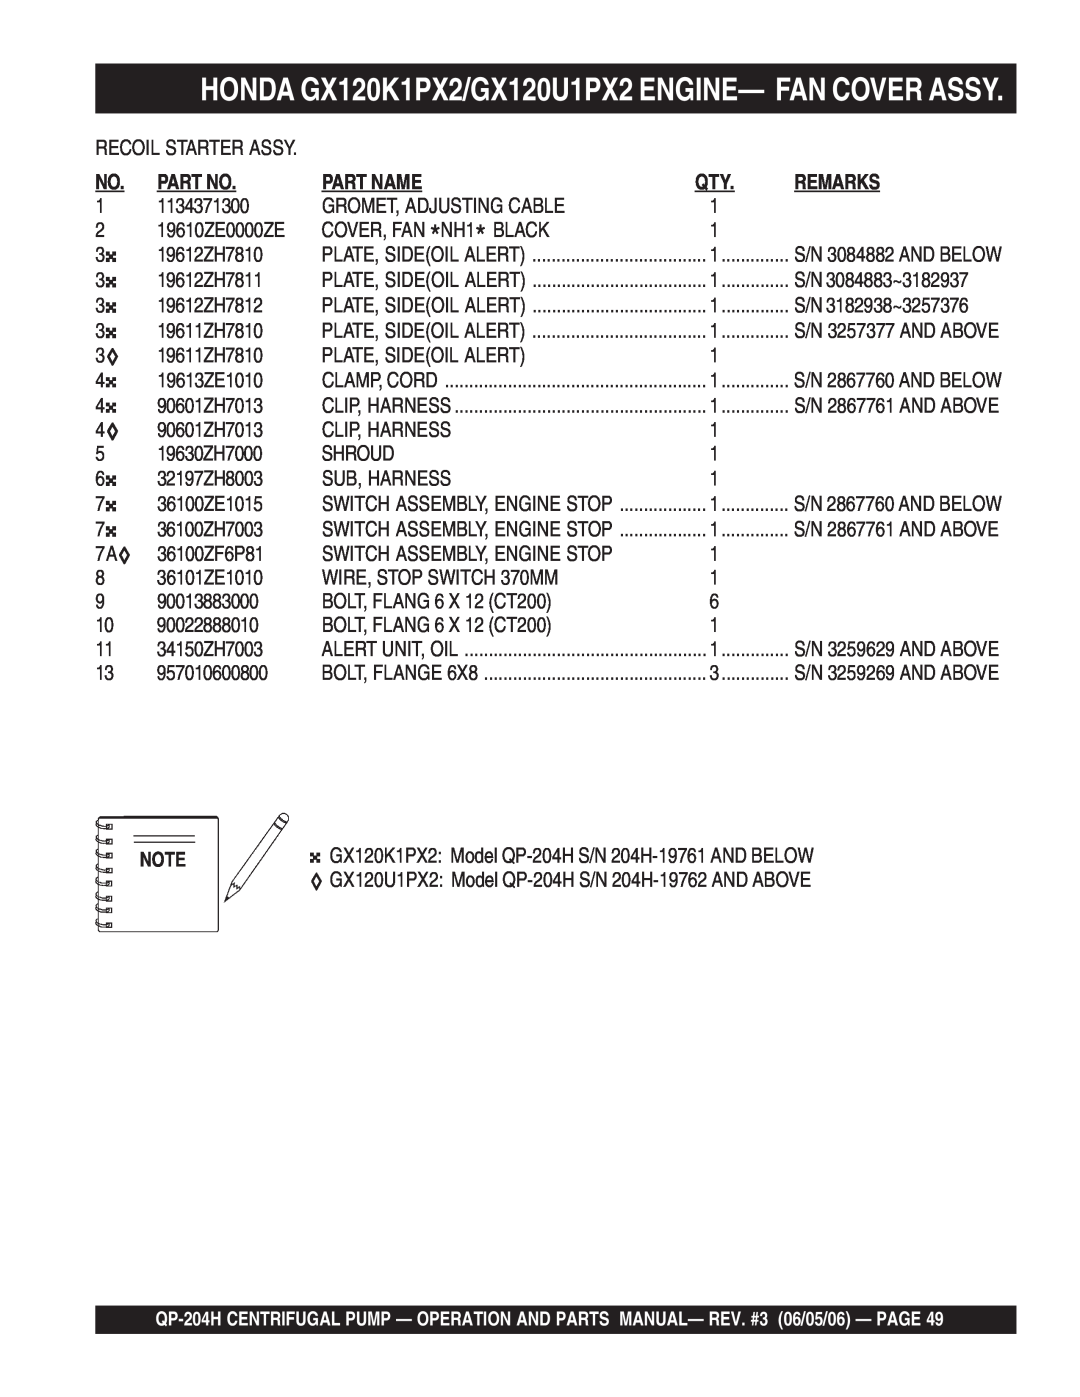 Multiquip QP-204H manual Part Name, Remarks, 1134371300 